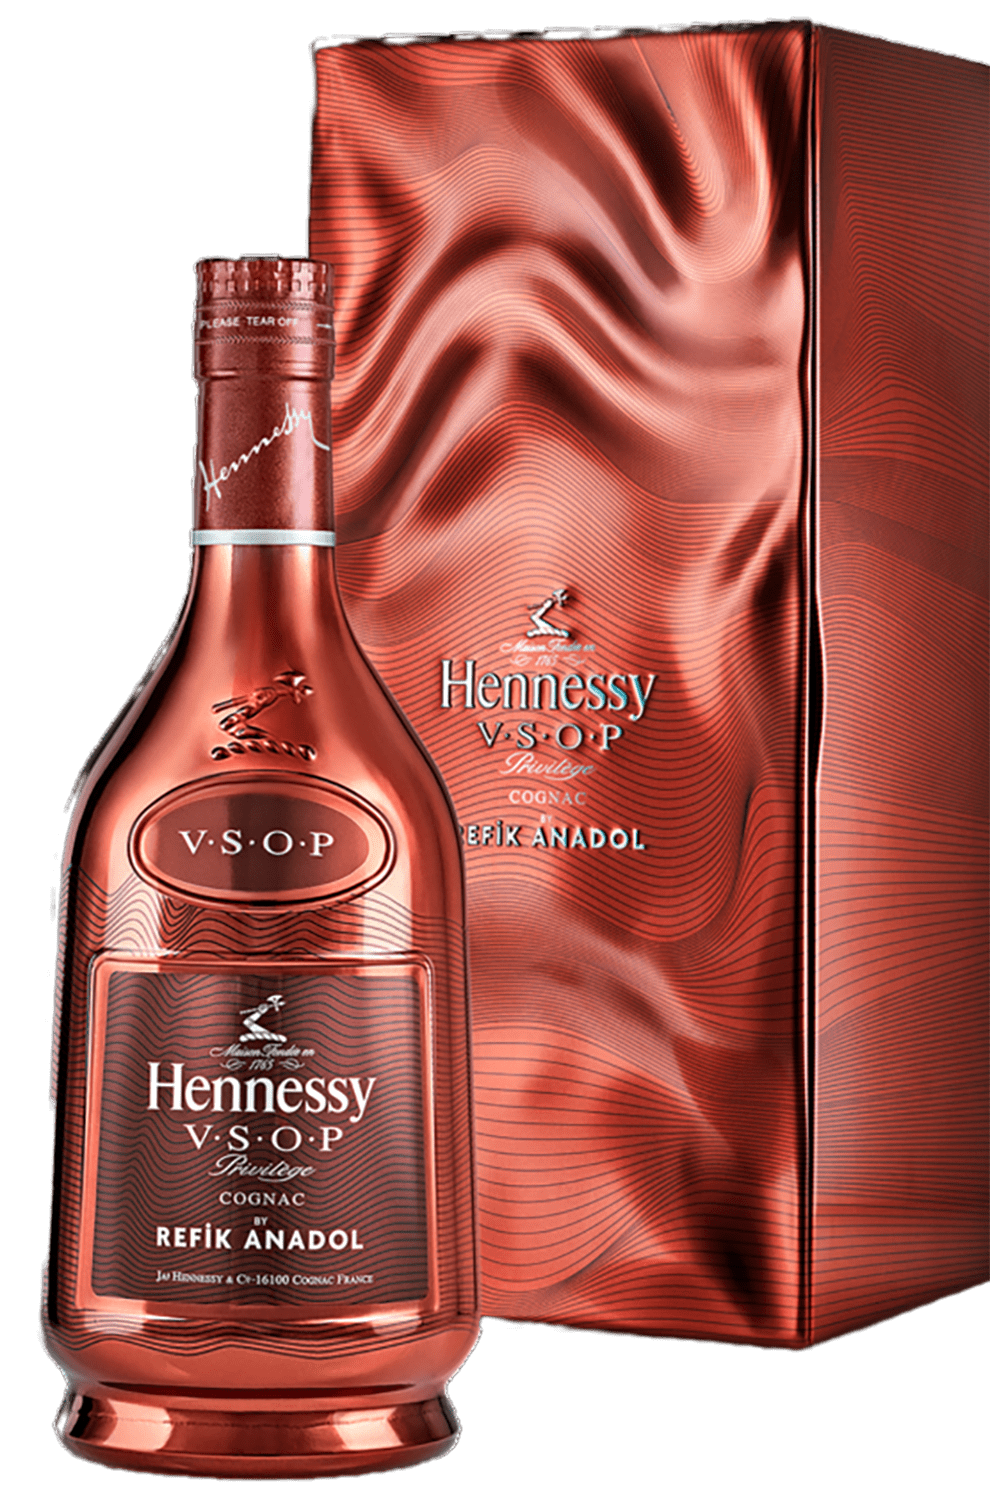 Hennessy Privelege Limited Edition by Refik Anadol Cognac VSOP (gift box) hennessy cognac vsop